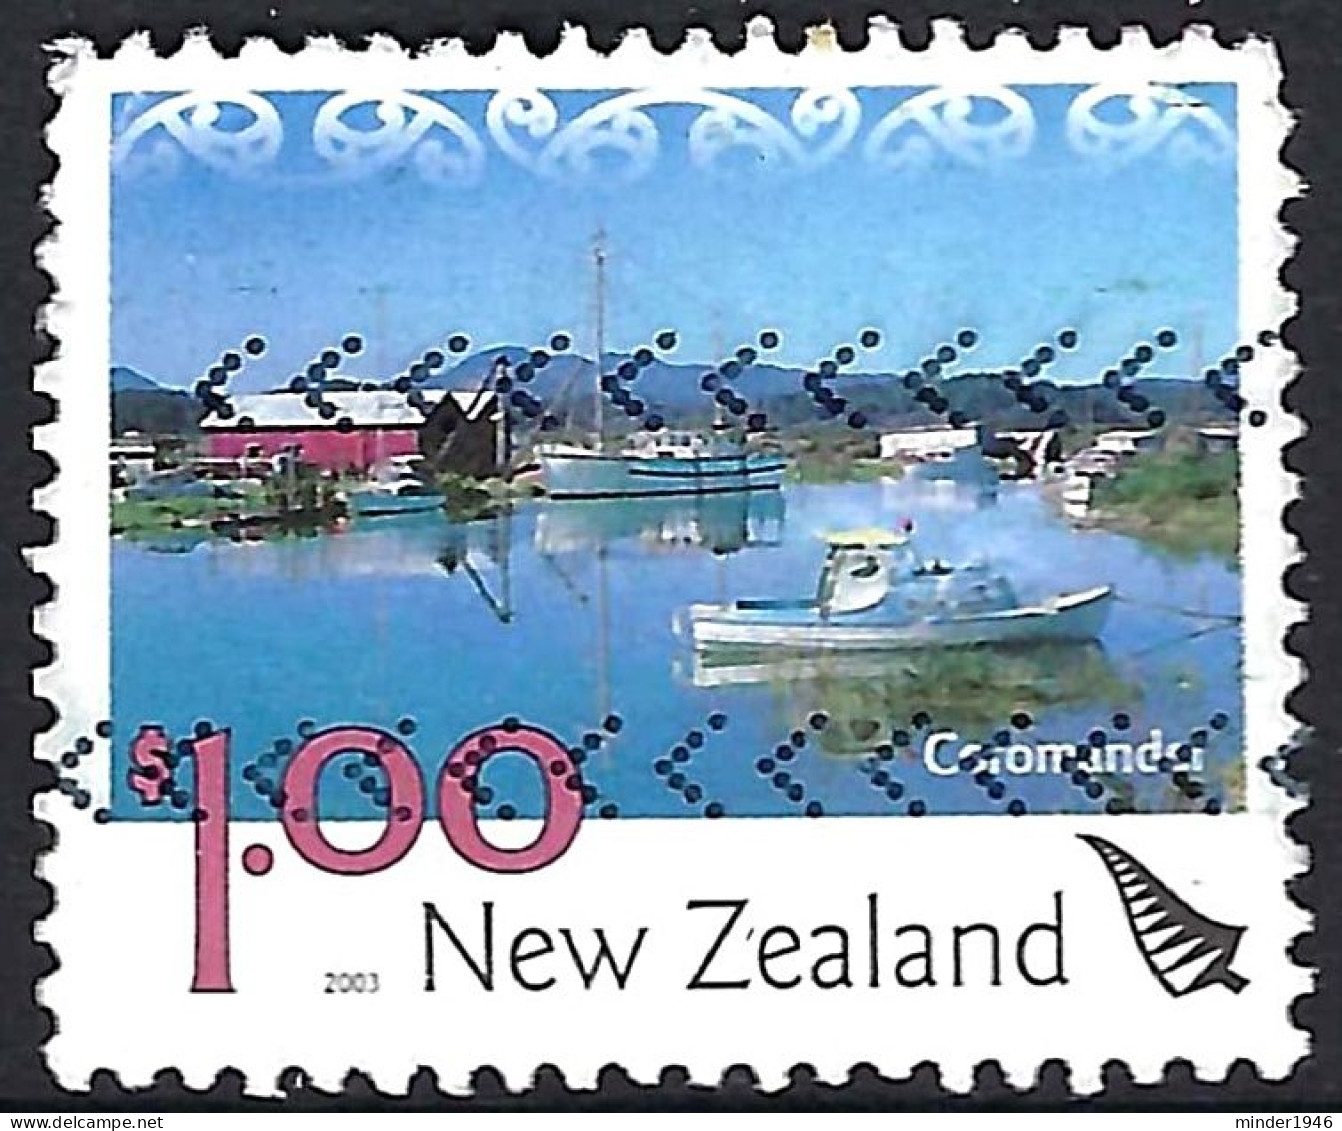 NEW ZEALAND 2003 QEII $1 Multicoloured, Scenery-Coromandel FU - Gebraucht